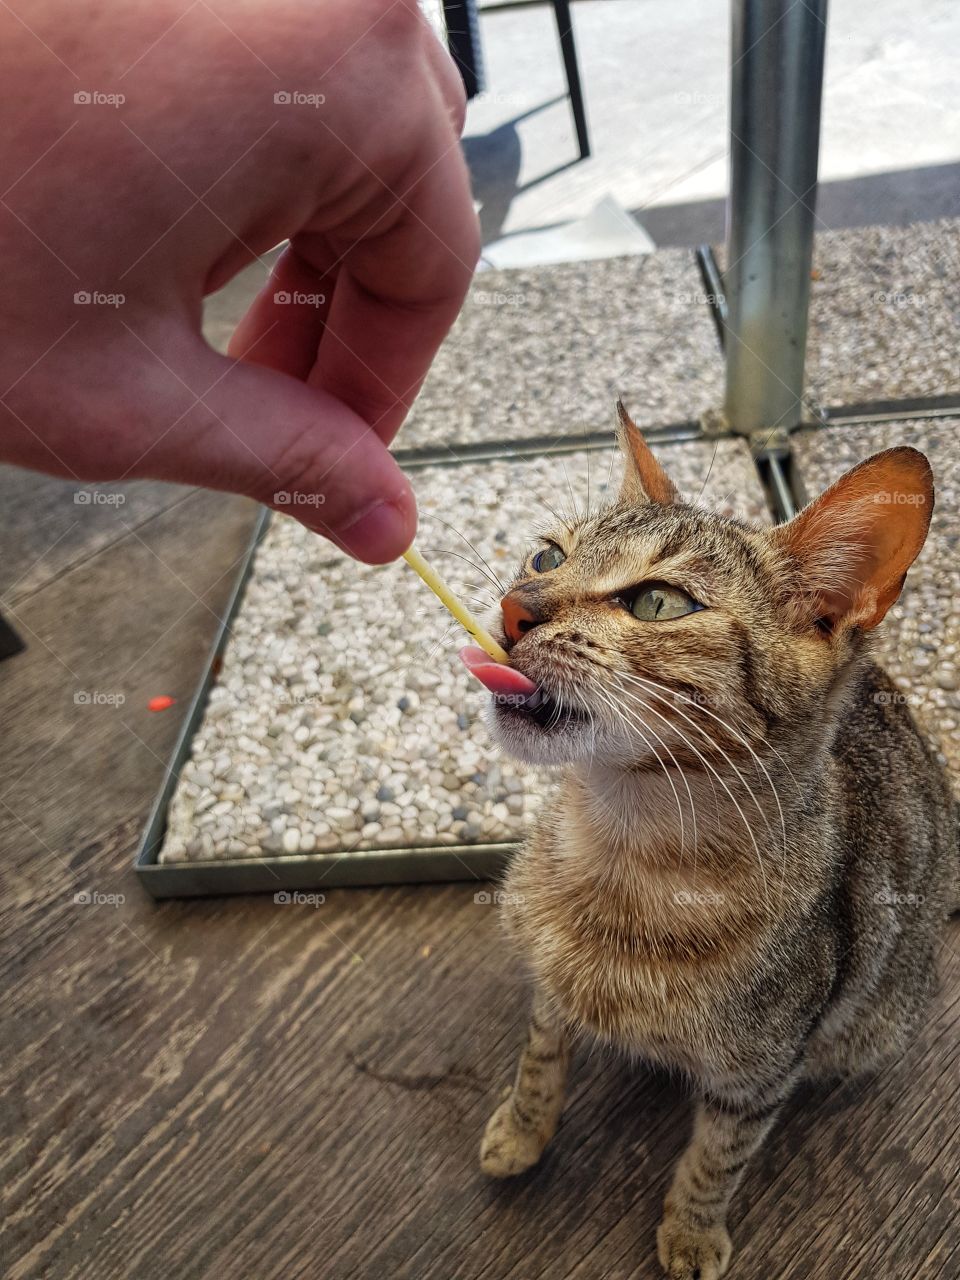 Feeding Italian cat with Italian food.